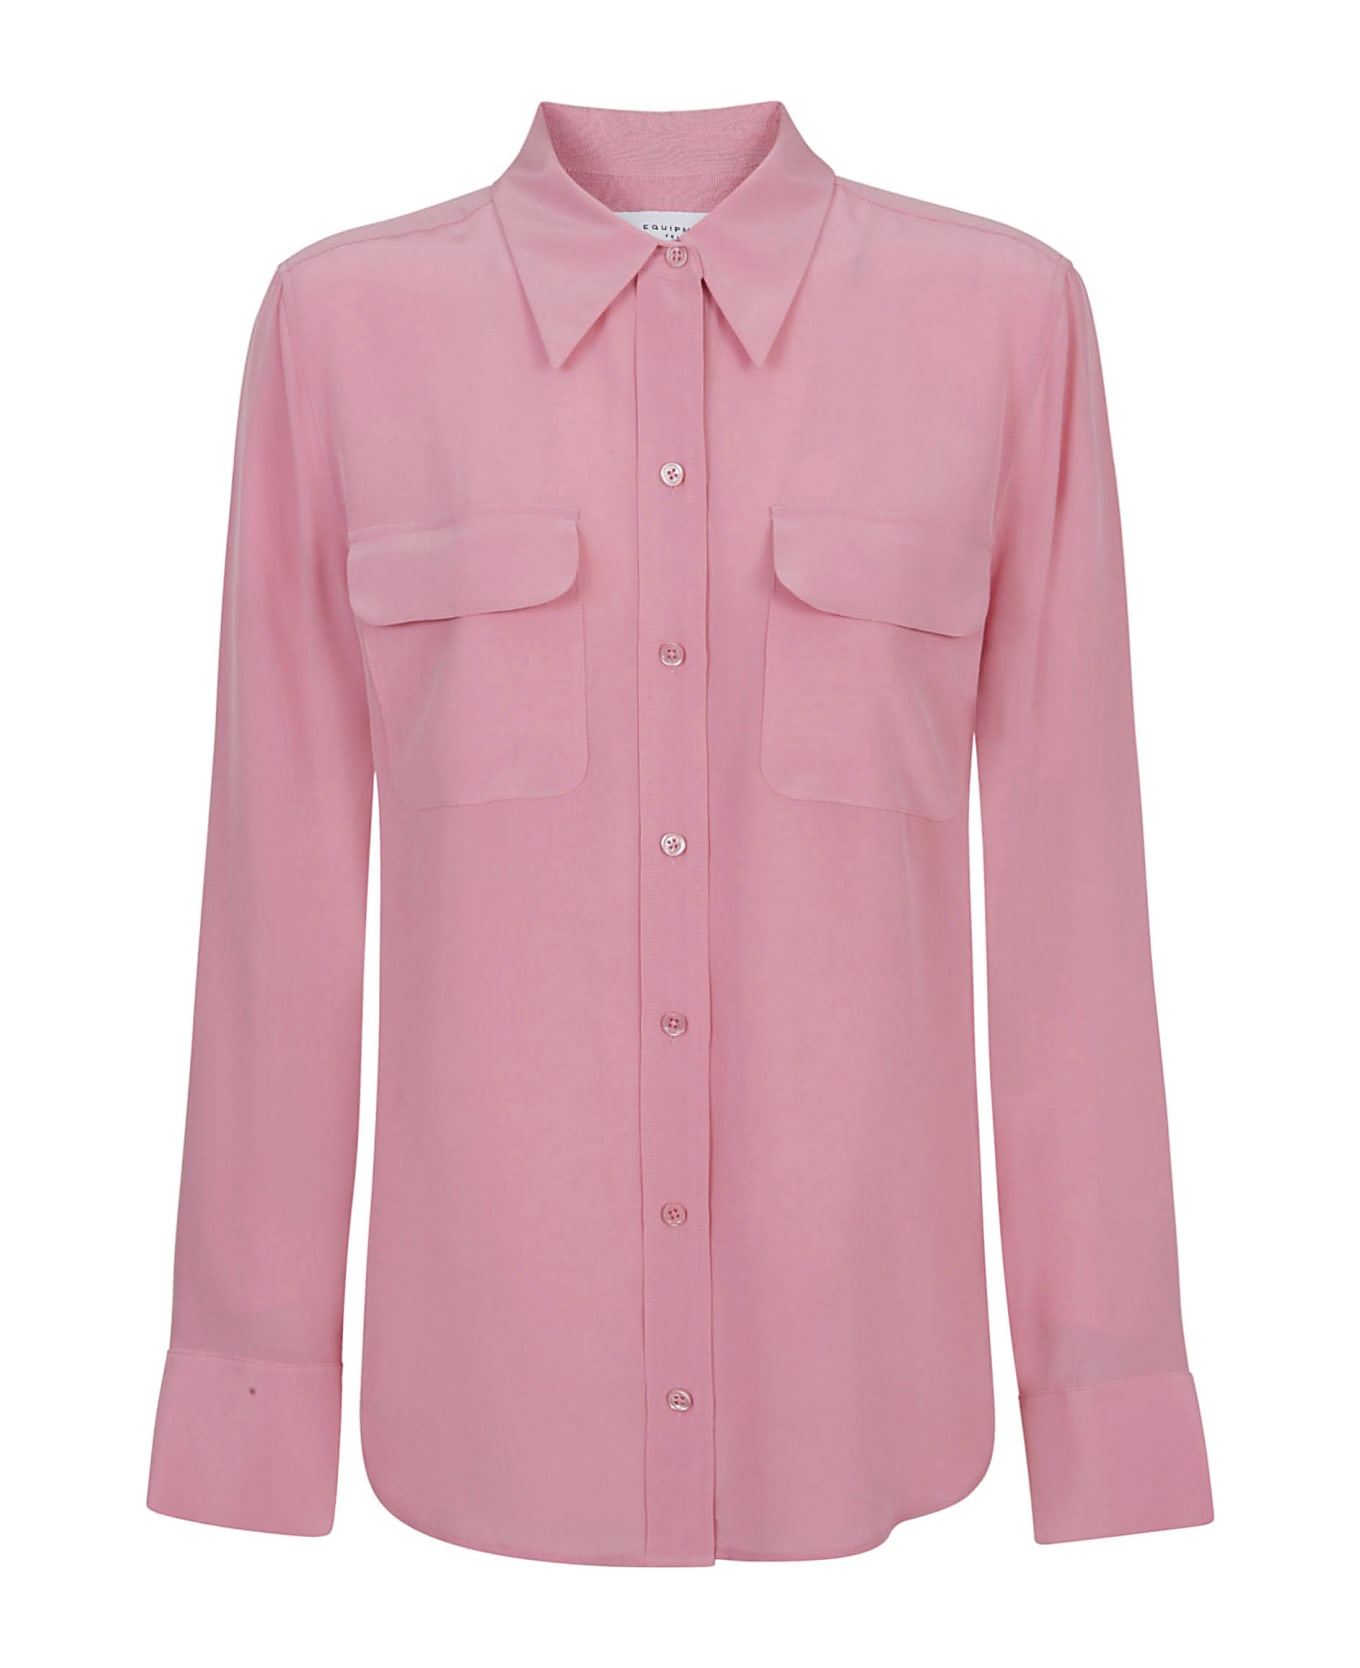 Equipment Shirts Pink - Pink シャツ